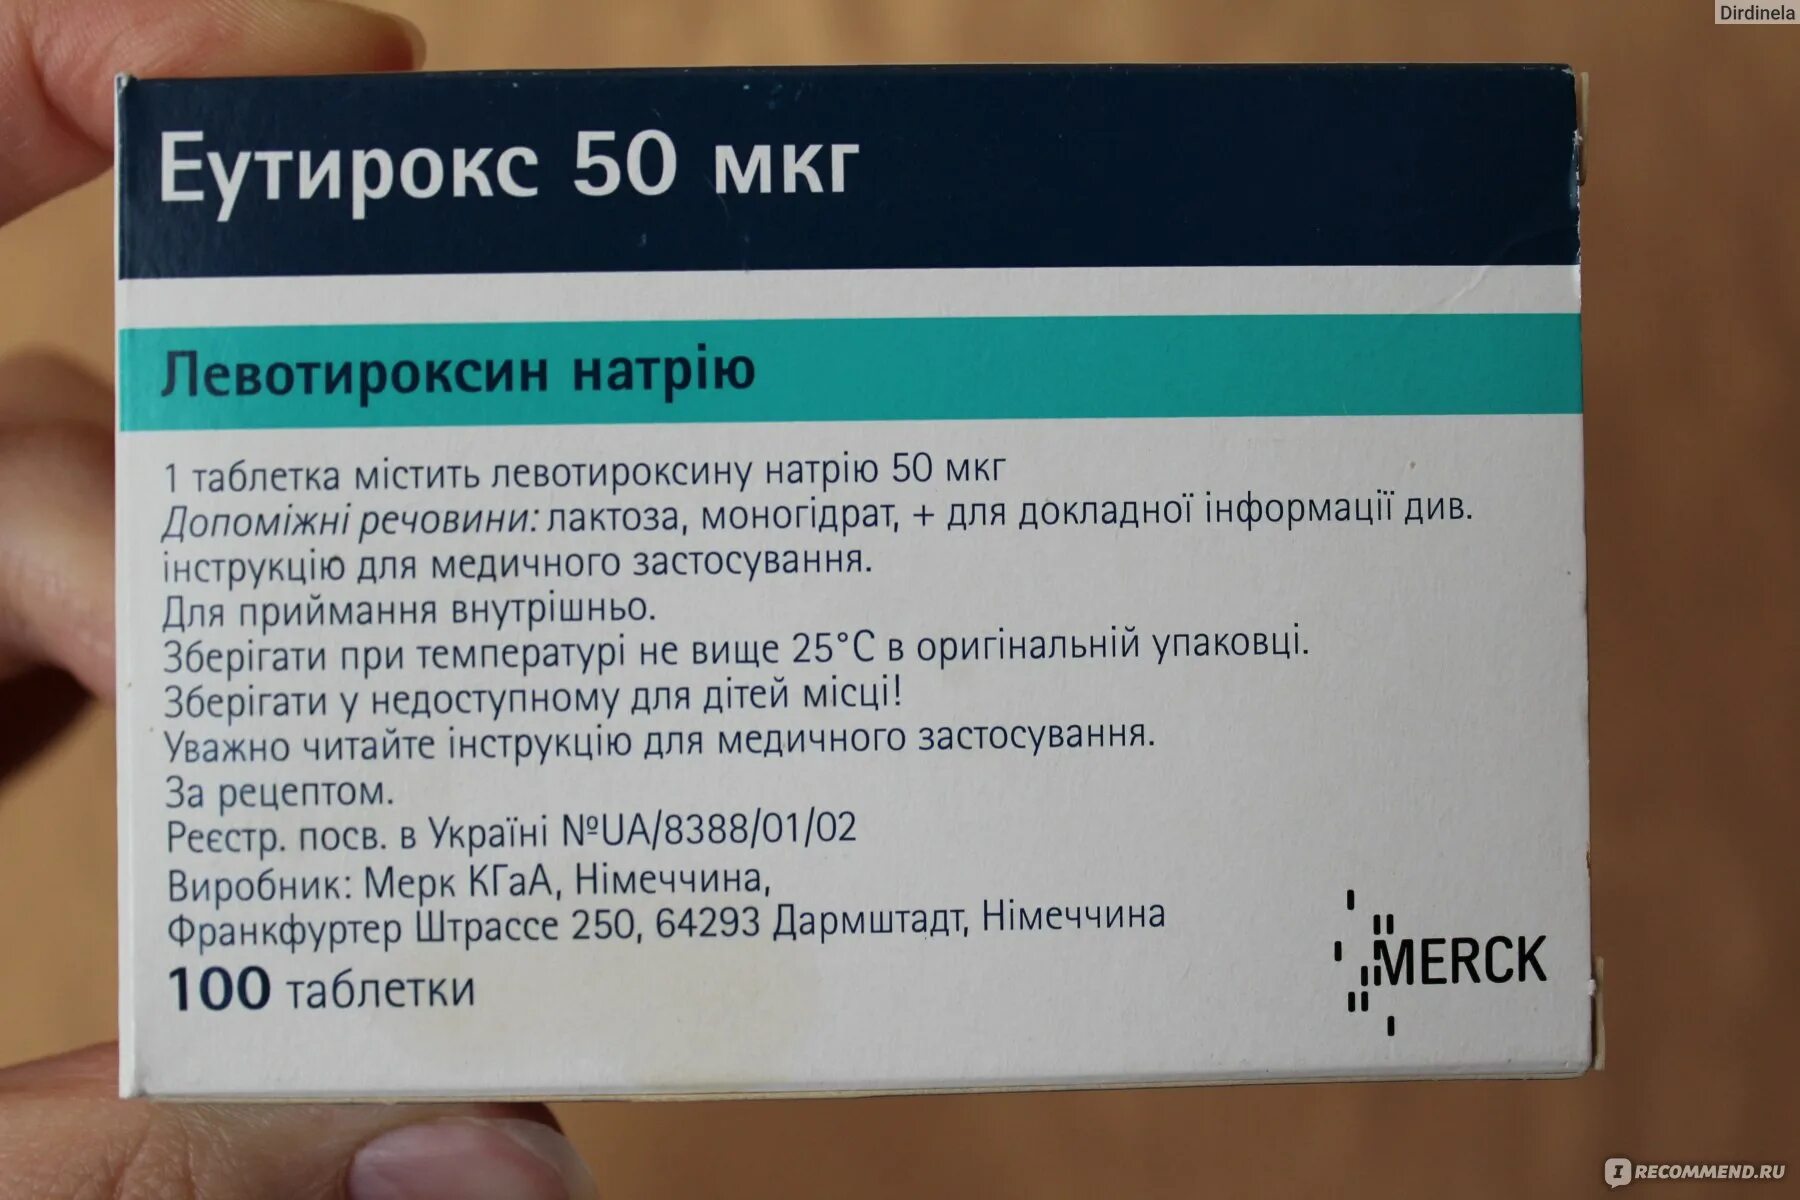 Таблетки при гипотиреозе эутирокс. Эутирокс Мерк. Эутирокс 50. Эутирокс 50 мкг.